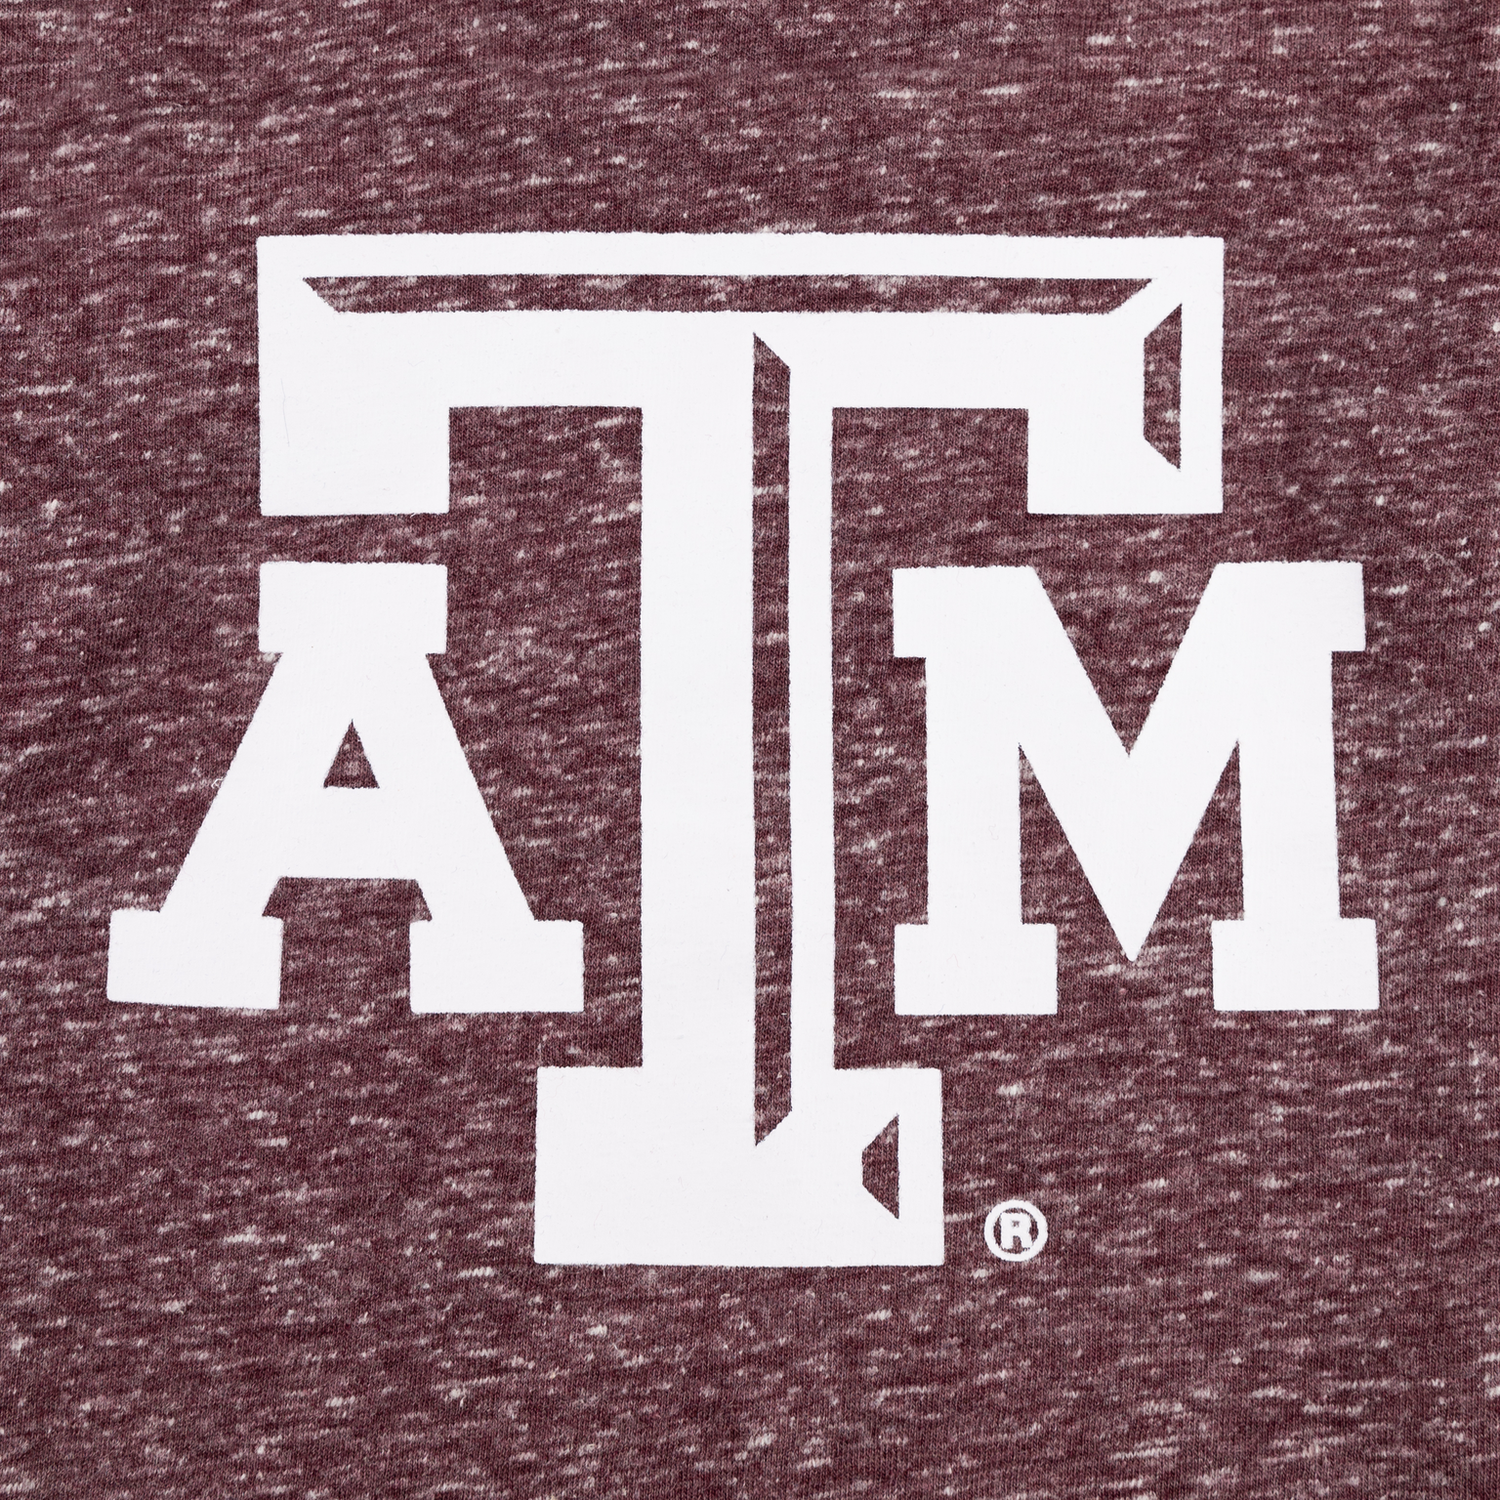 Texas A&M Heather Block T-Shirt